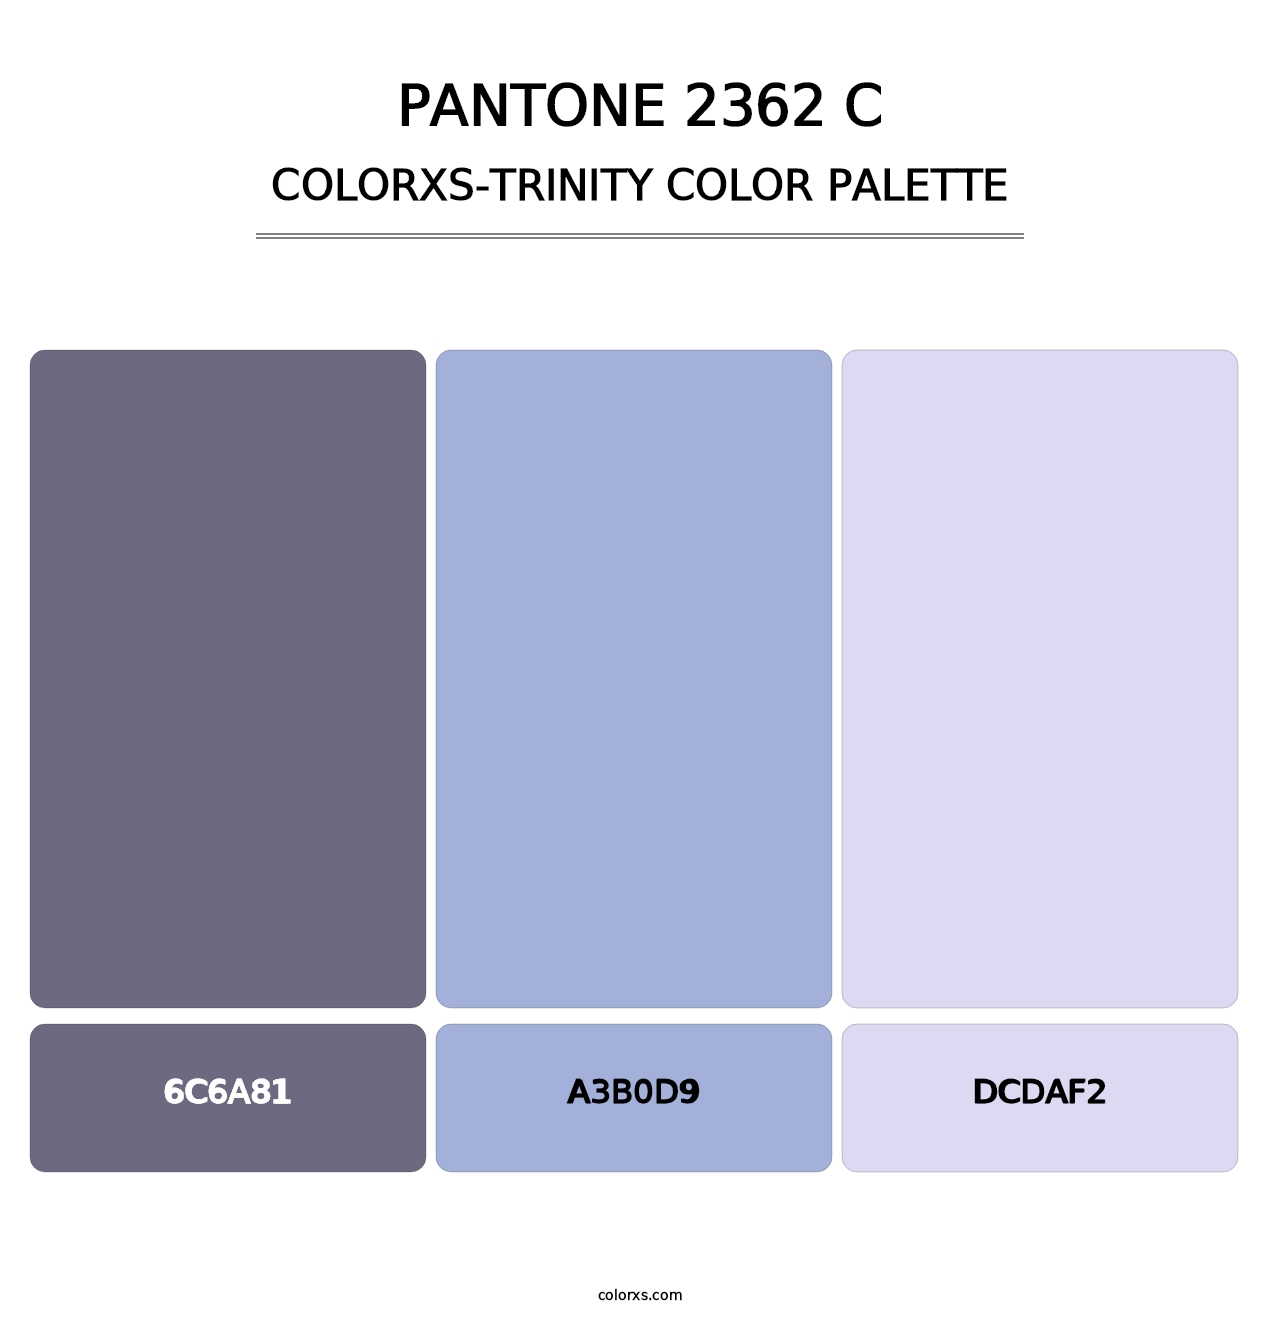 PANTONE 2362 C - Colorxs Trinity Palette